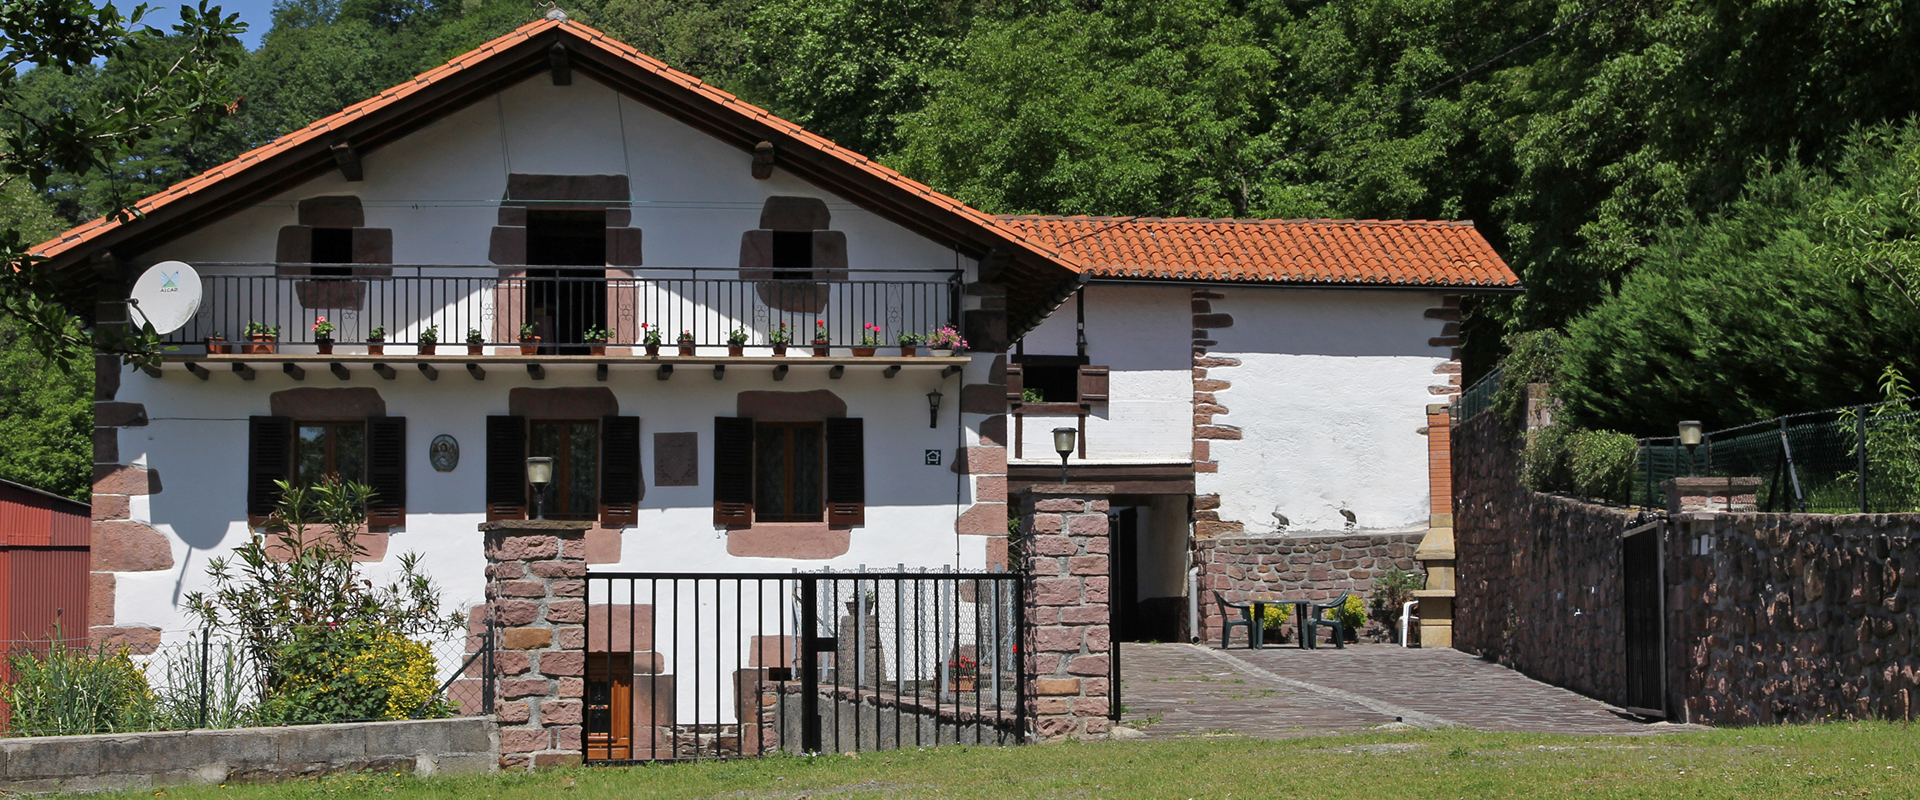 Casa rural Señorenea en Arraioz, Baztan